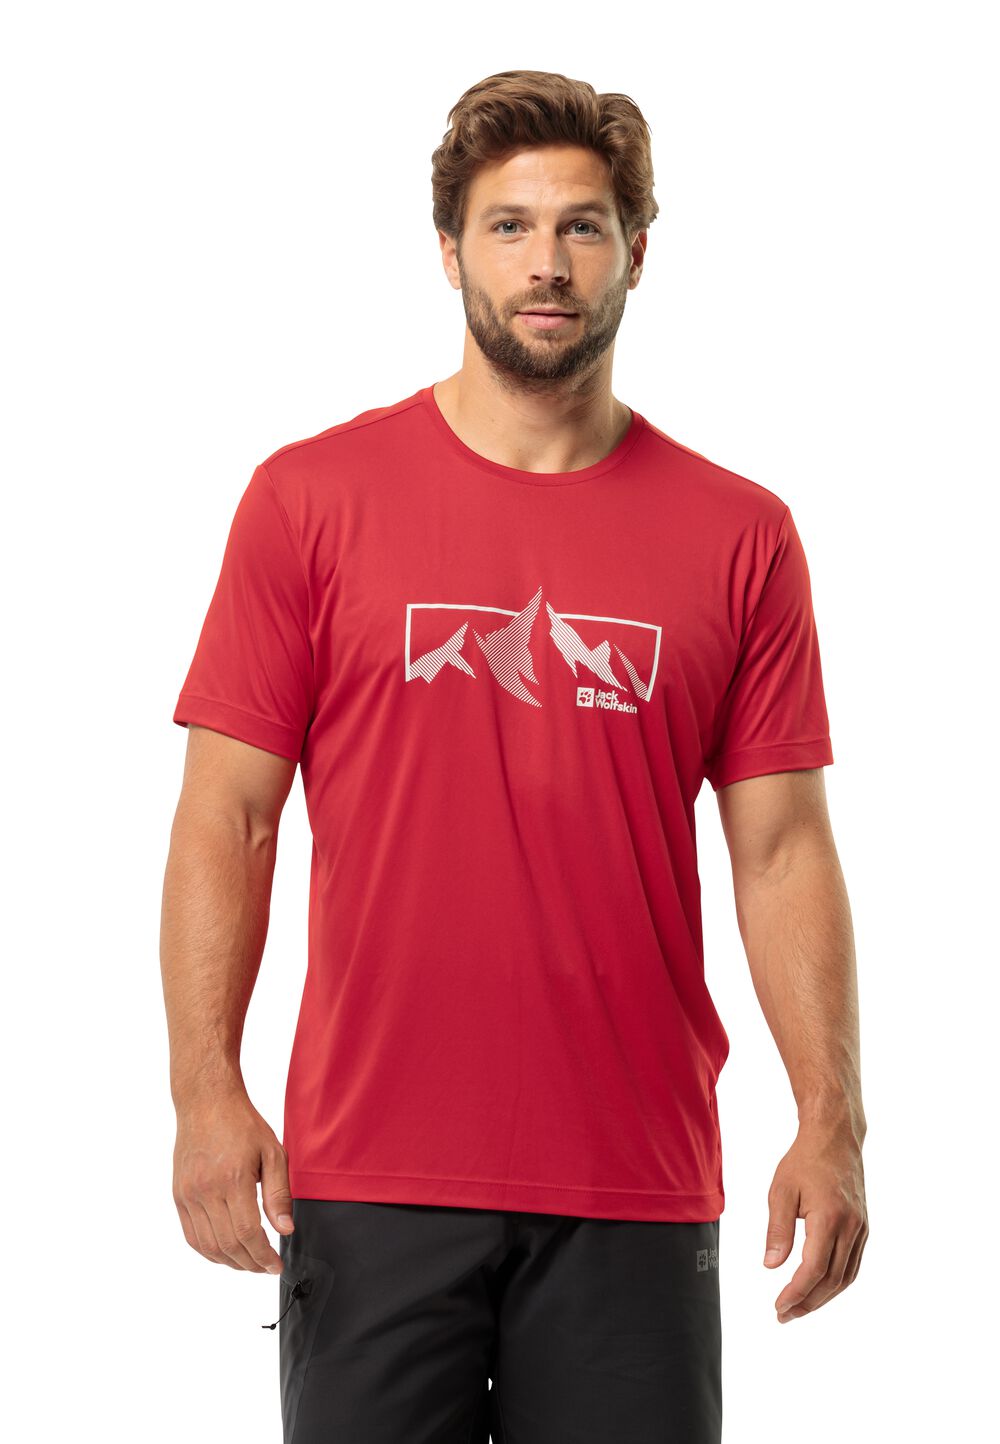 Jack Wolfskin Peak Graphic T-Shirt Men Functioneel shirt Heren XL rood red glow